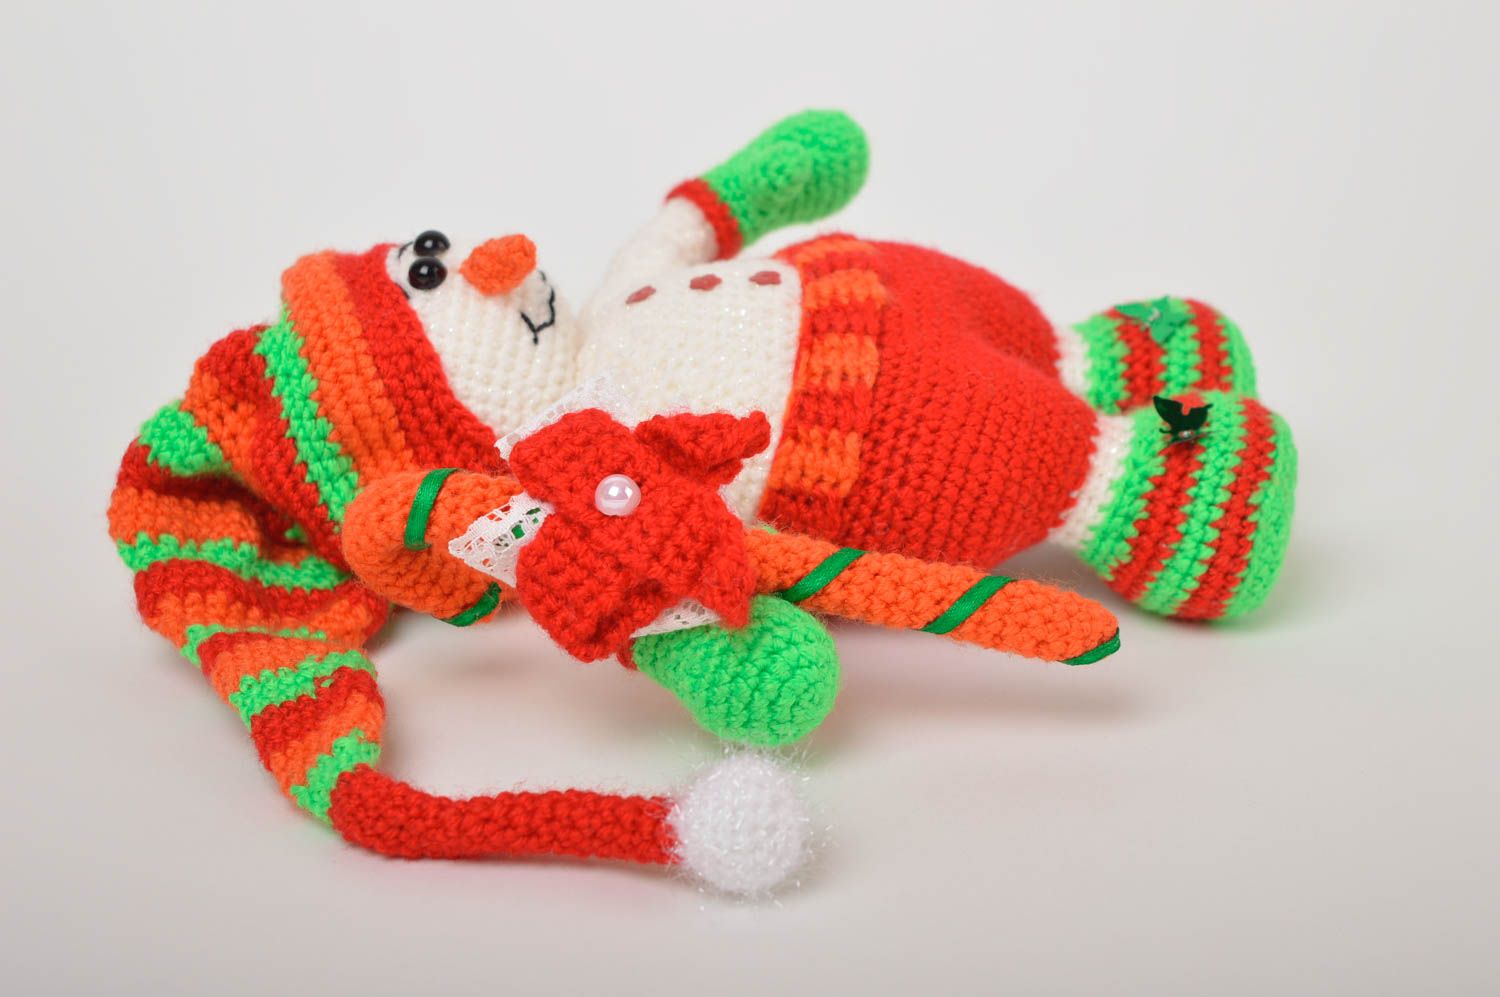 Festive toy for Christmas handmade crocheted toy for babied nursery decor photo 5